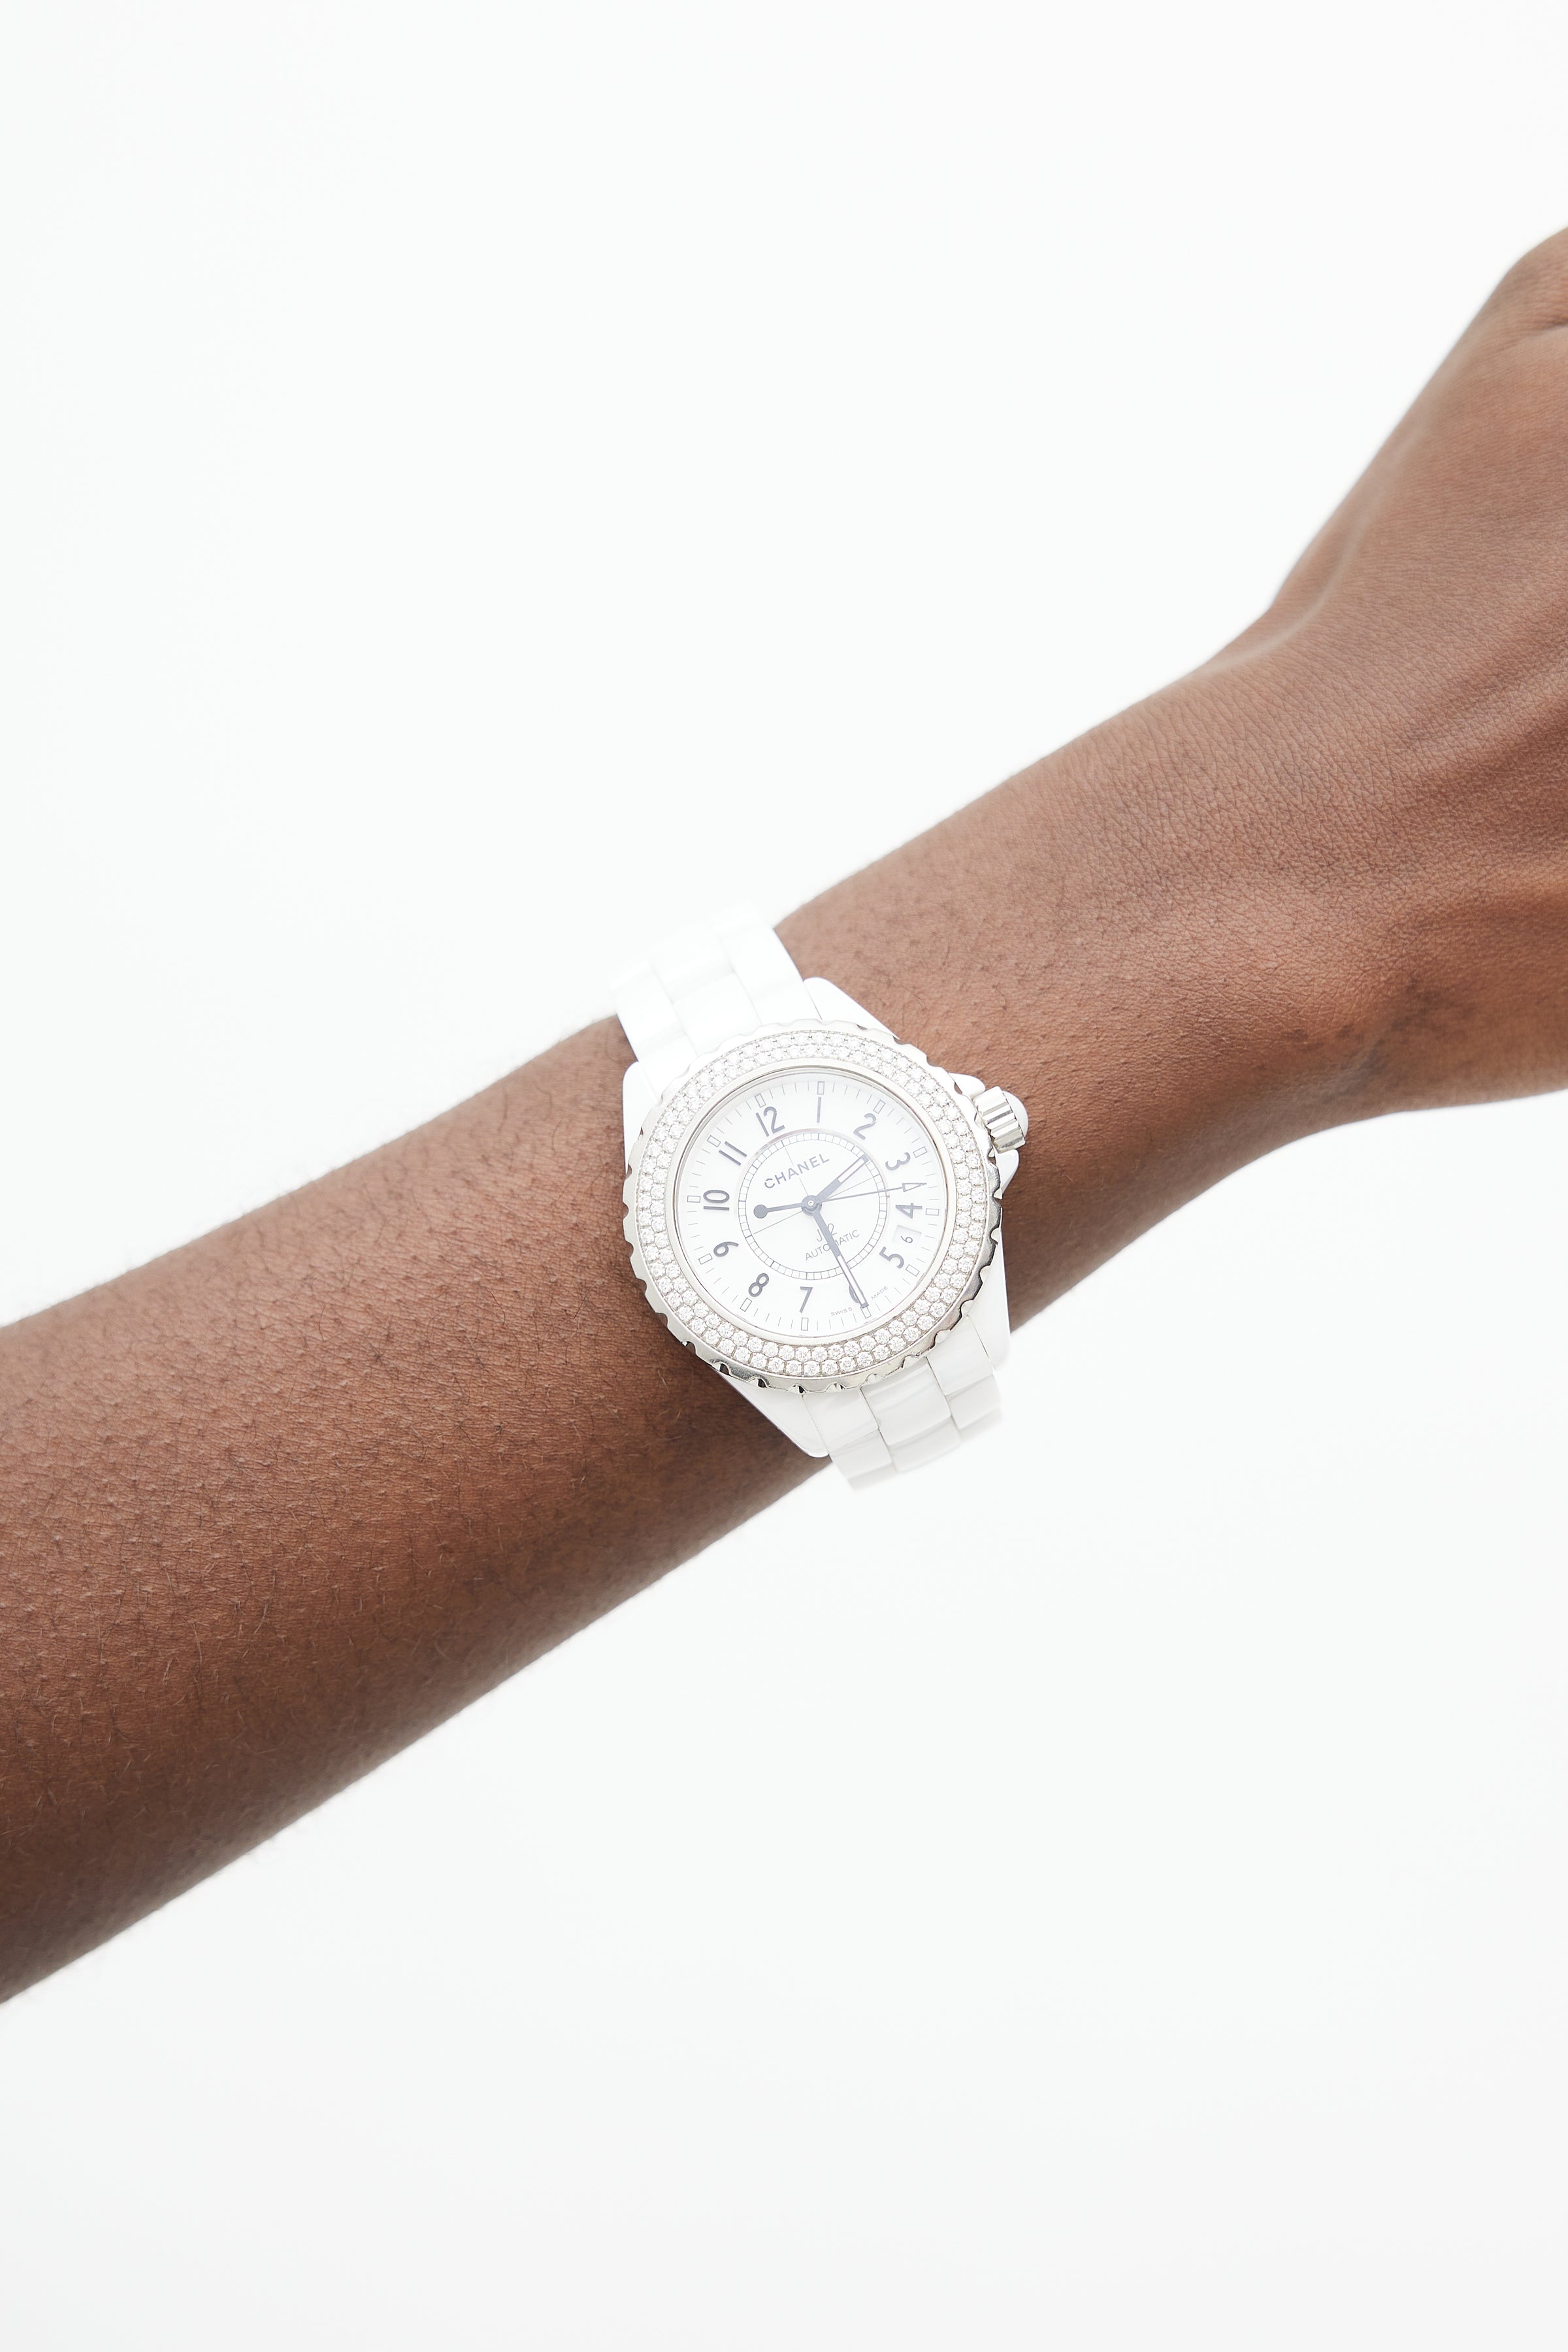 Chanel J12 Diamond White Ceramic H0967 Quartz Ladies Watch Pre-Owned [b1107]